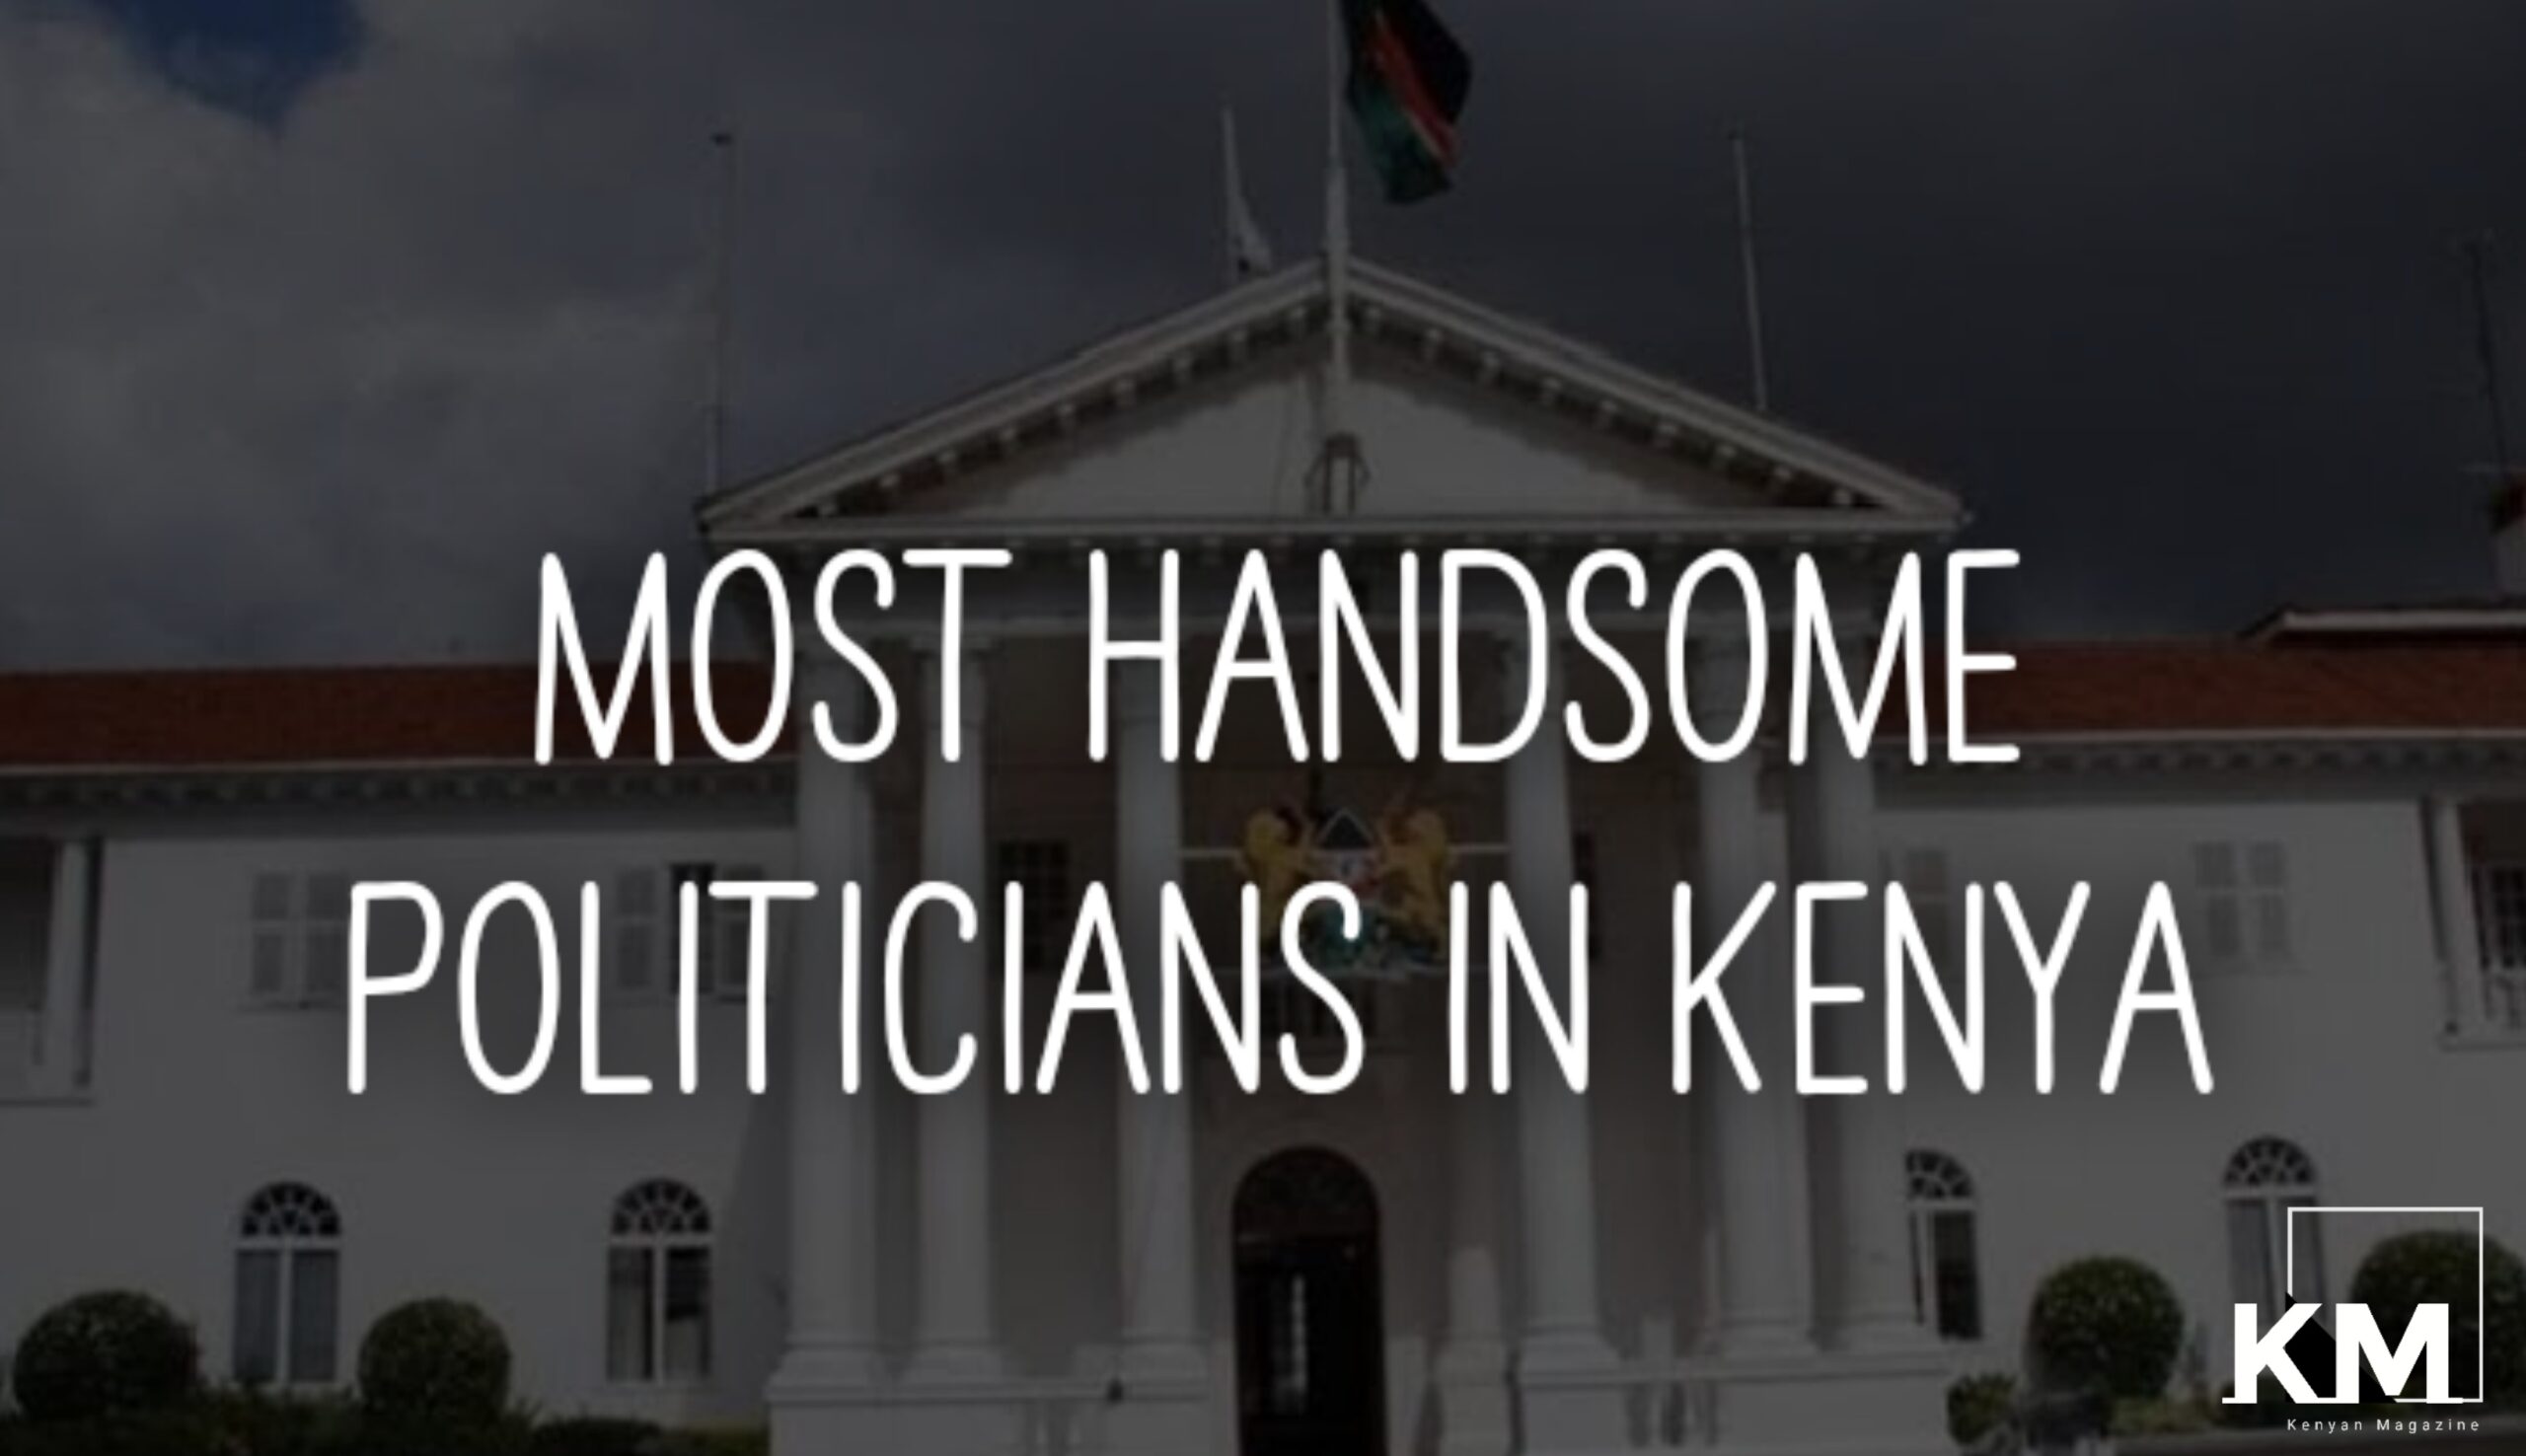 Most Handsome politicians in Kenya